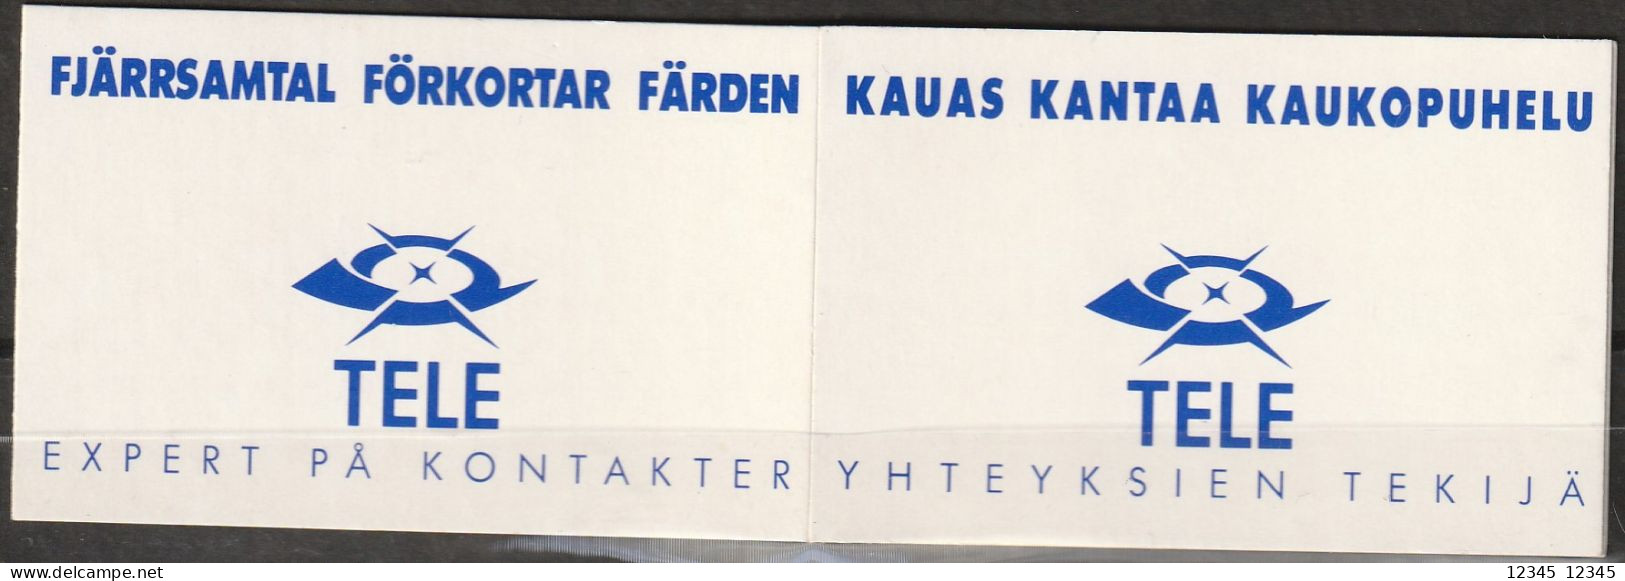 Finland 1991, Postfris MNH, Birds - Booklets